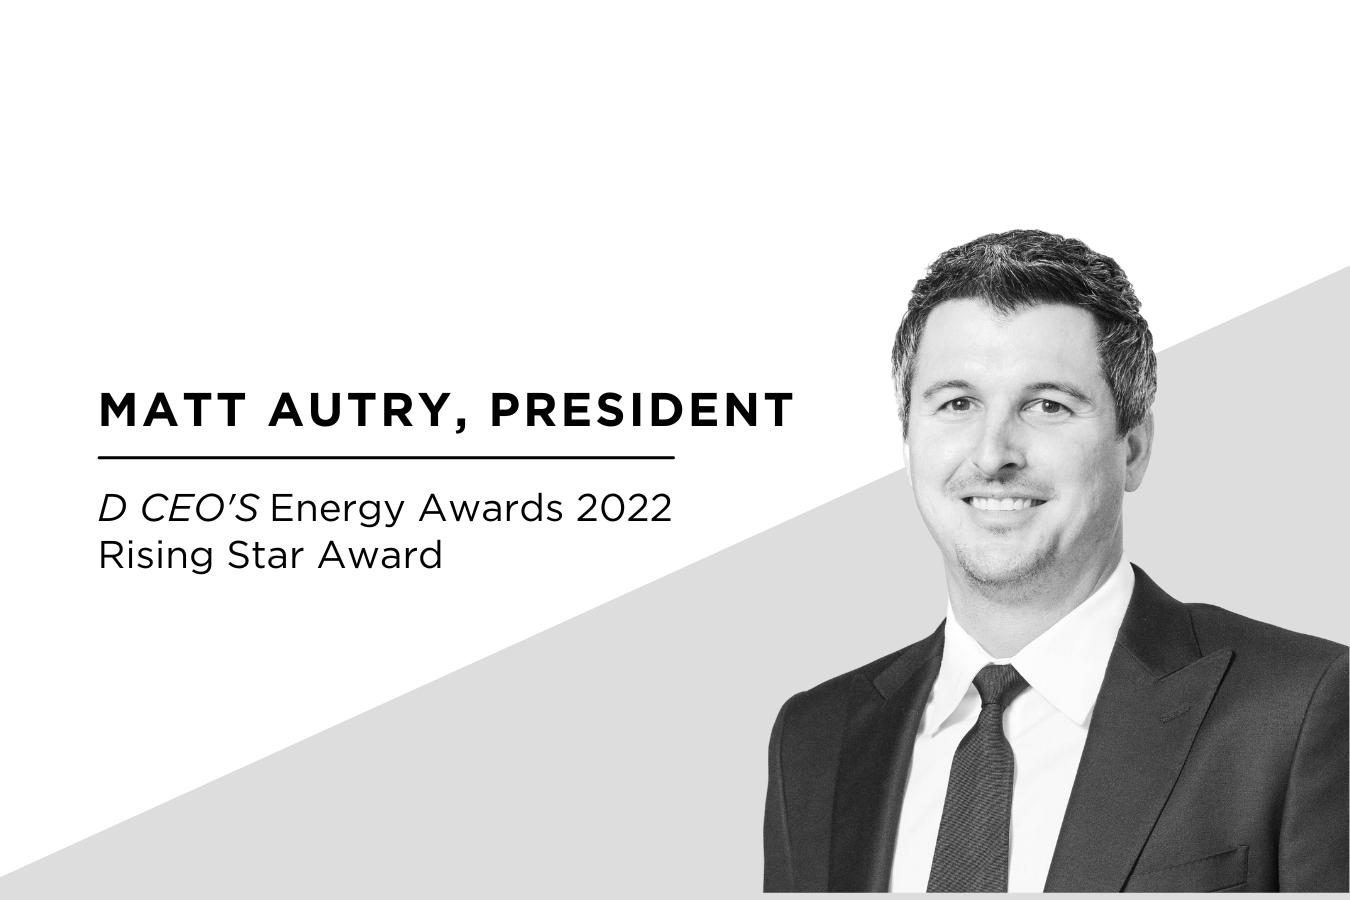 D CEO Honors Matt Autry With Award